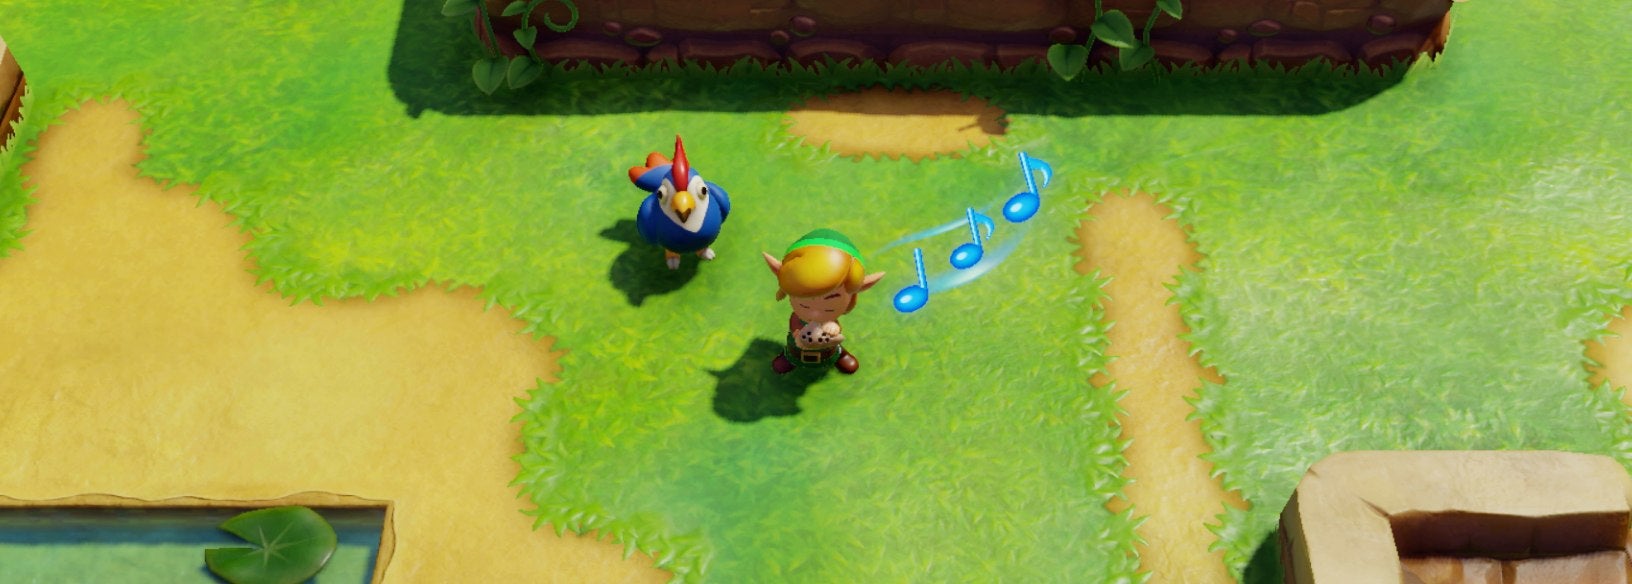 Image for Zelda Link's Awakening Ocarina Songs - How to Learn All Ocarina Songs